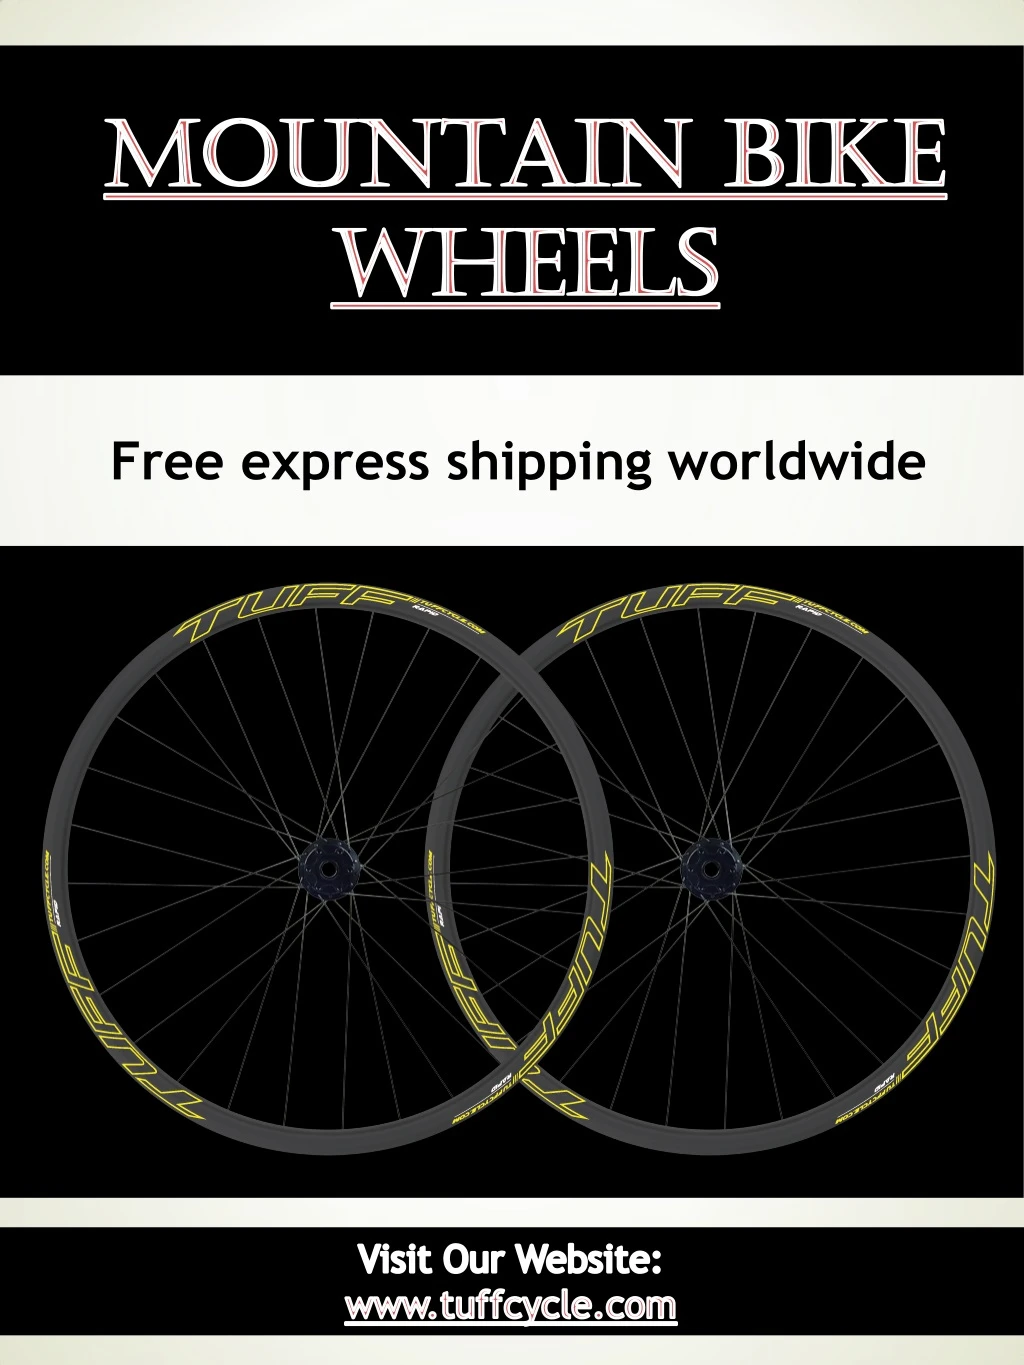 free express shipping worldwide